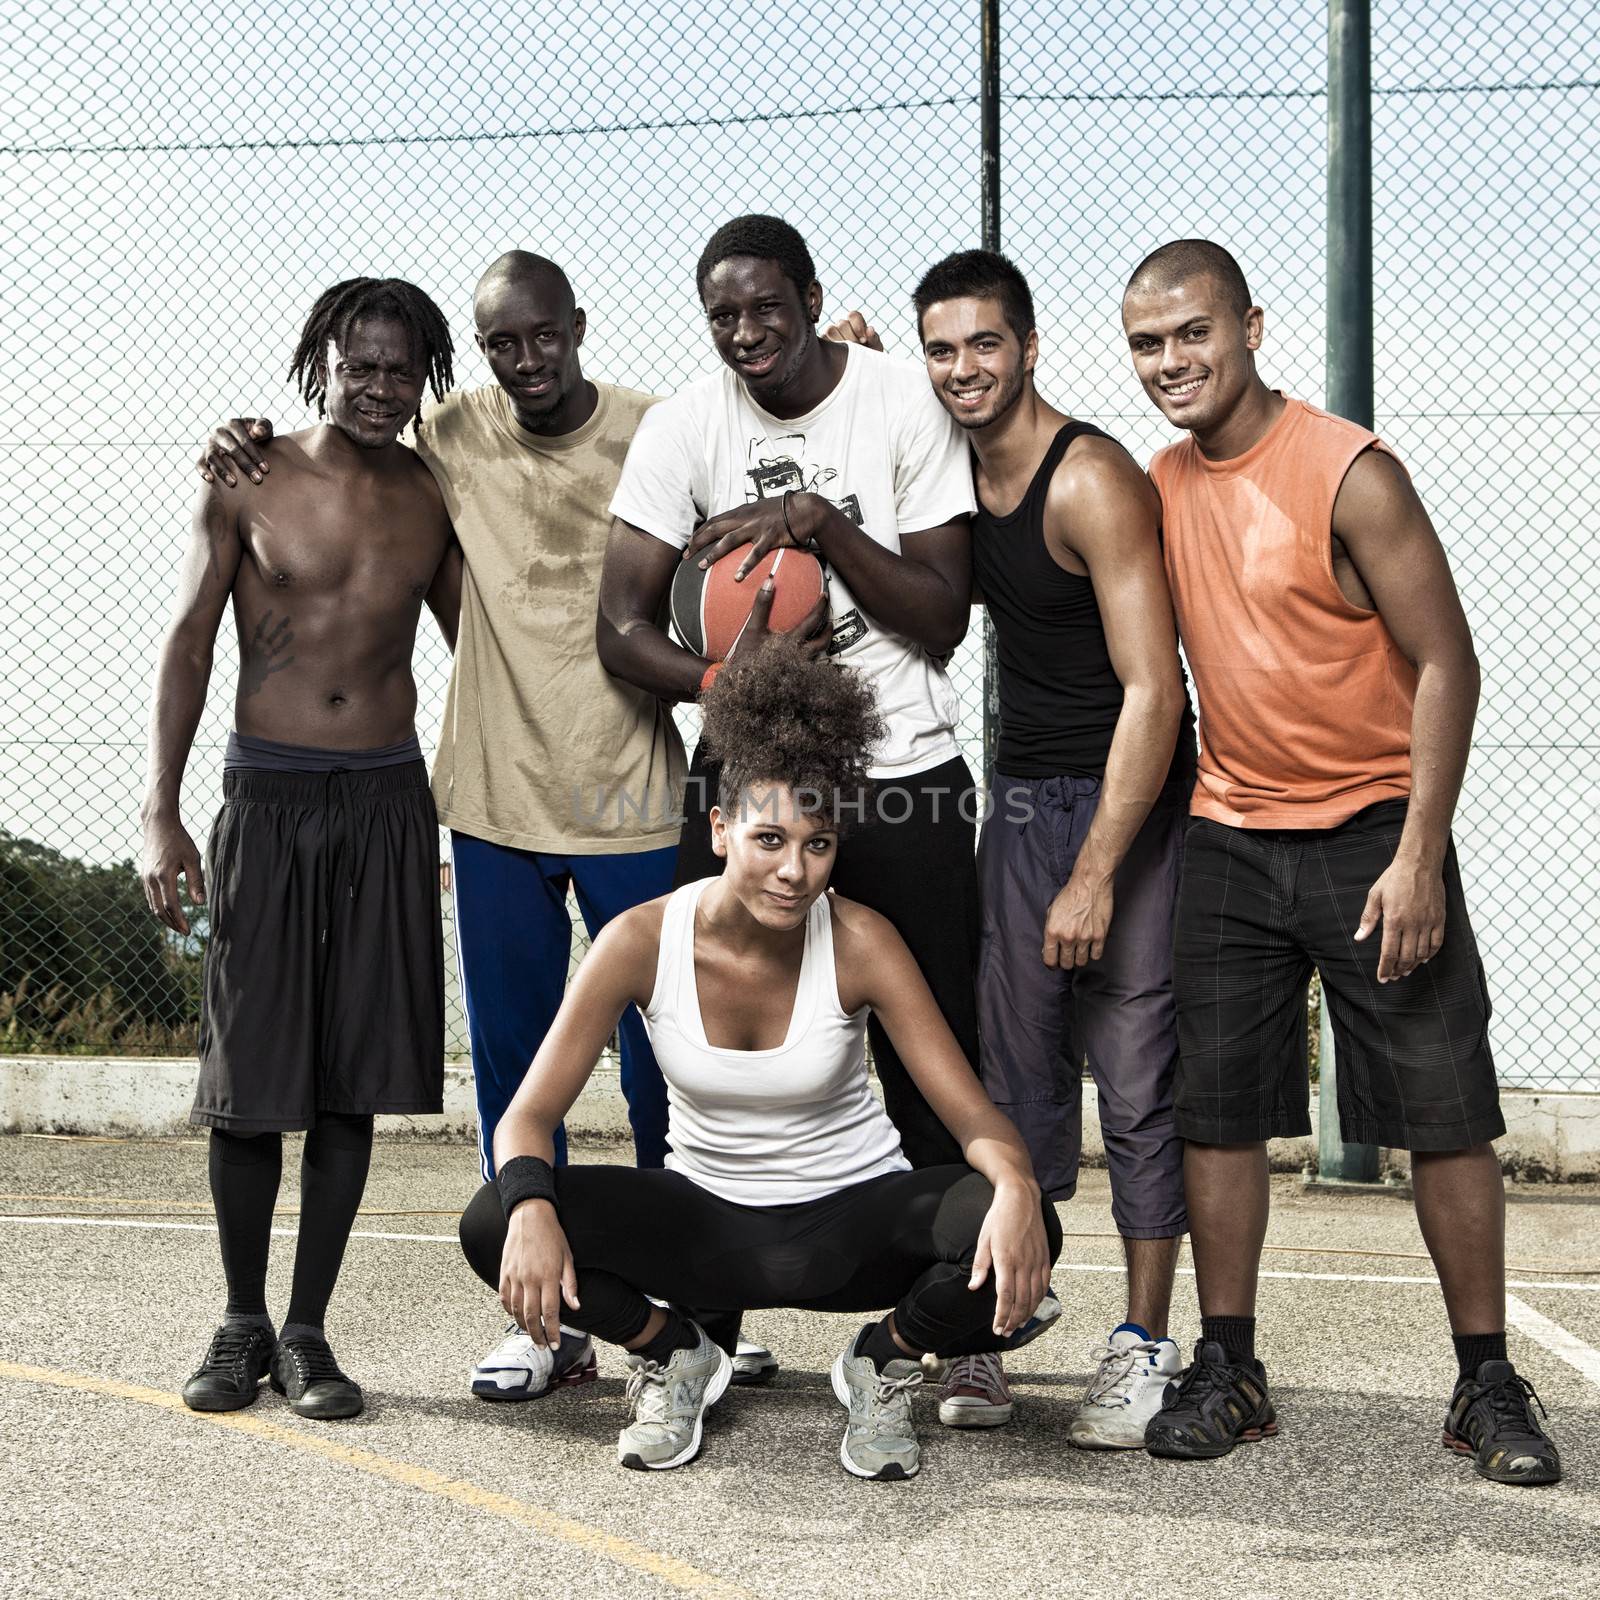 Group portrait of a street basketball team